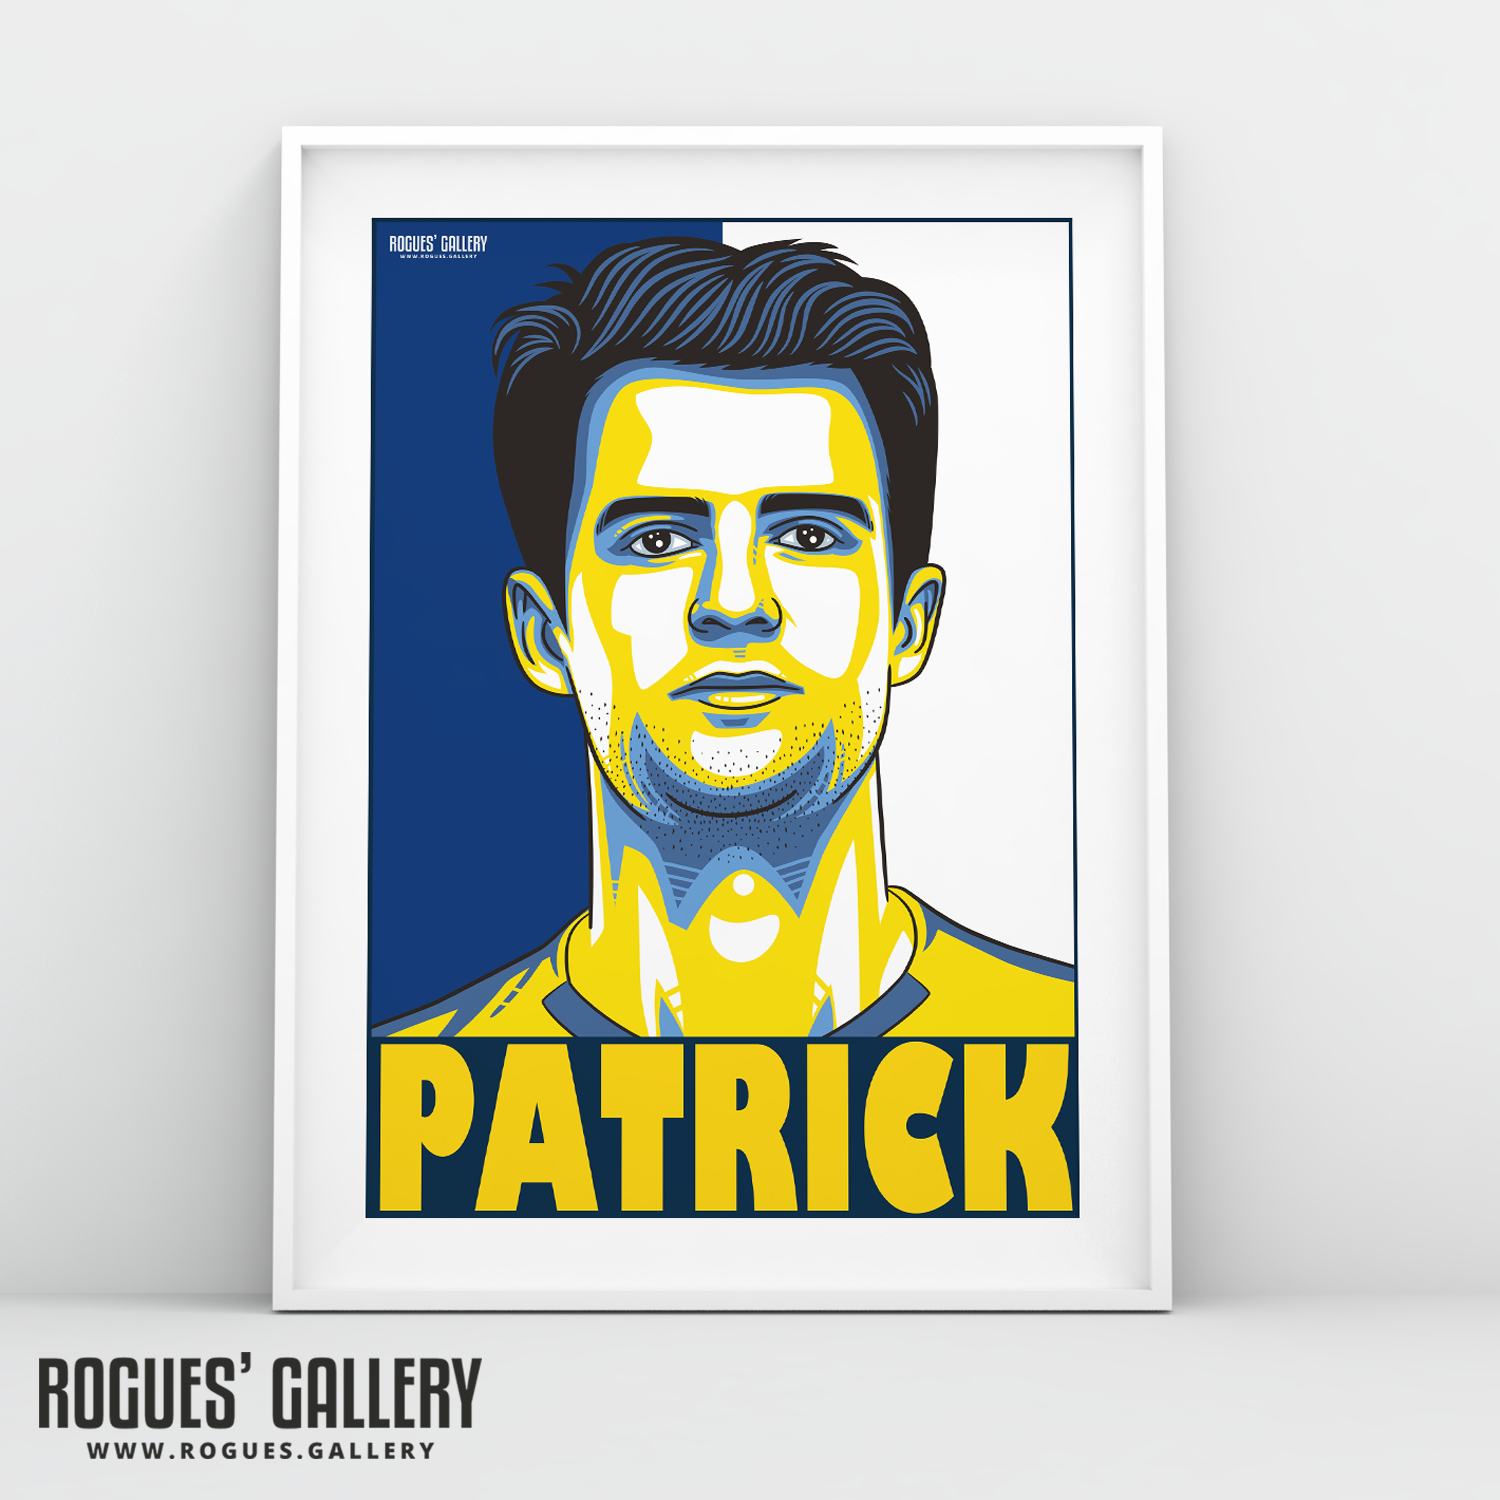 Patrick Bamford Leeds United FC striker A3 art print design